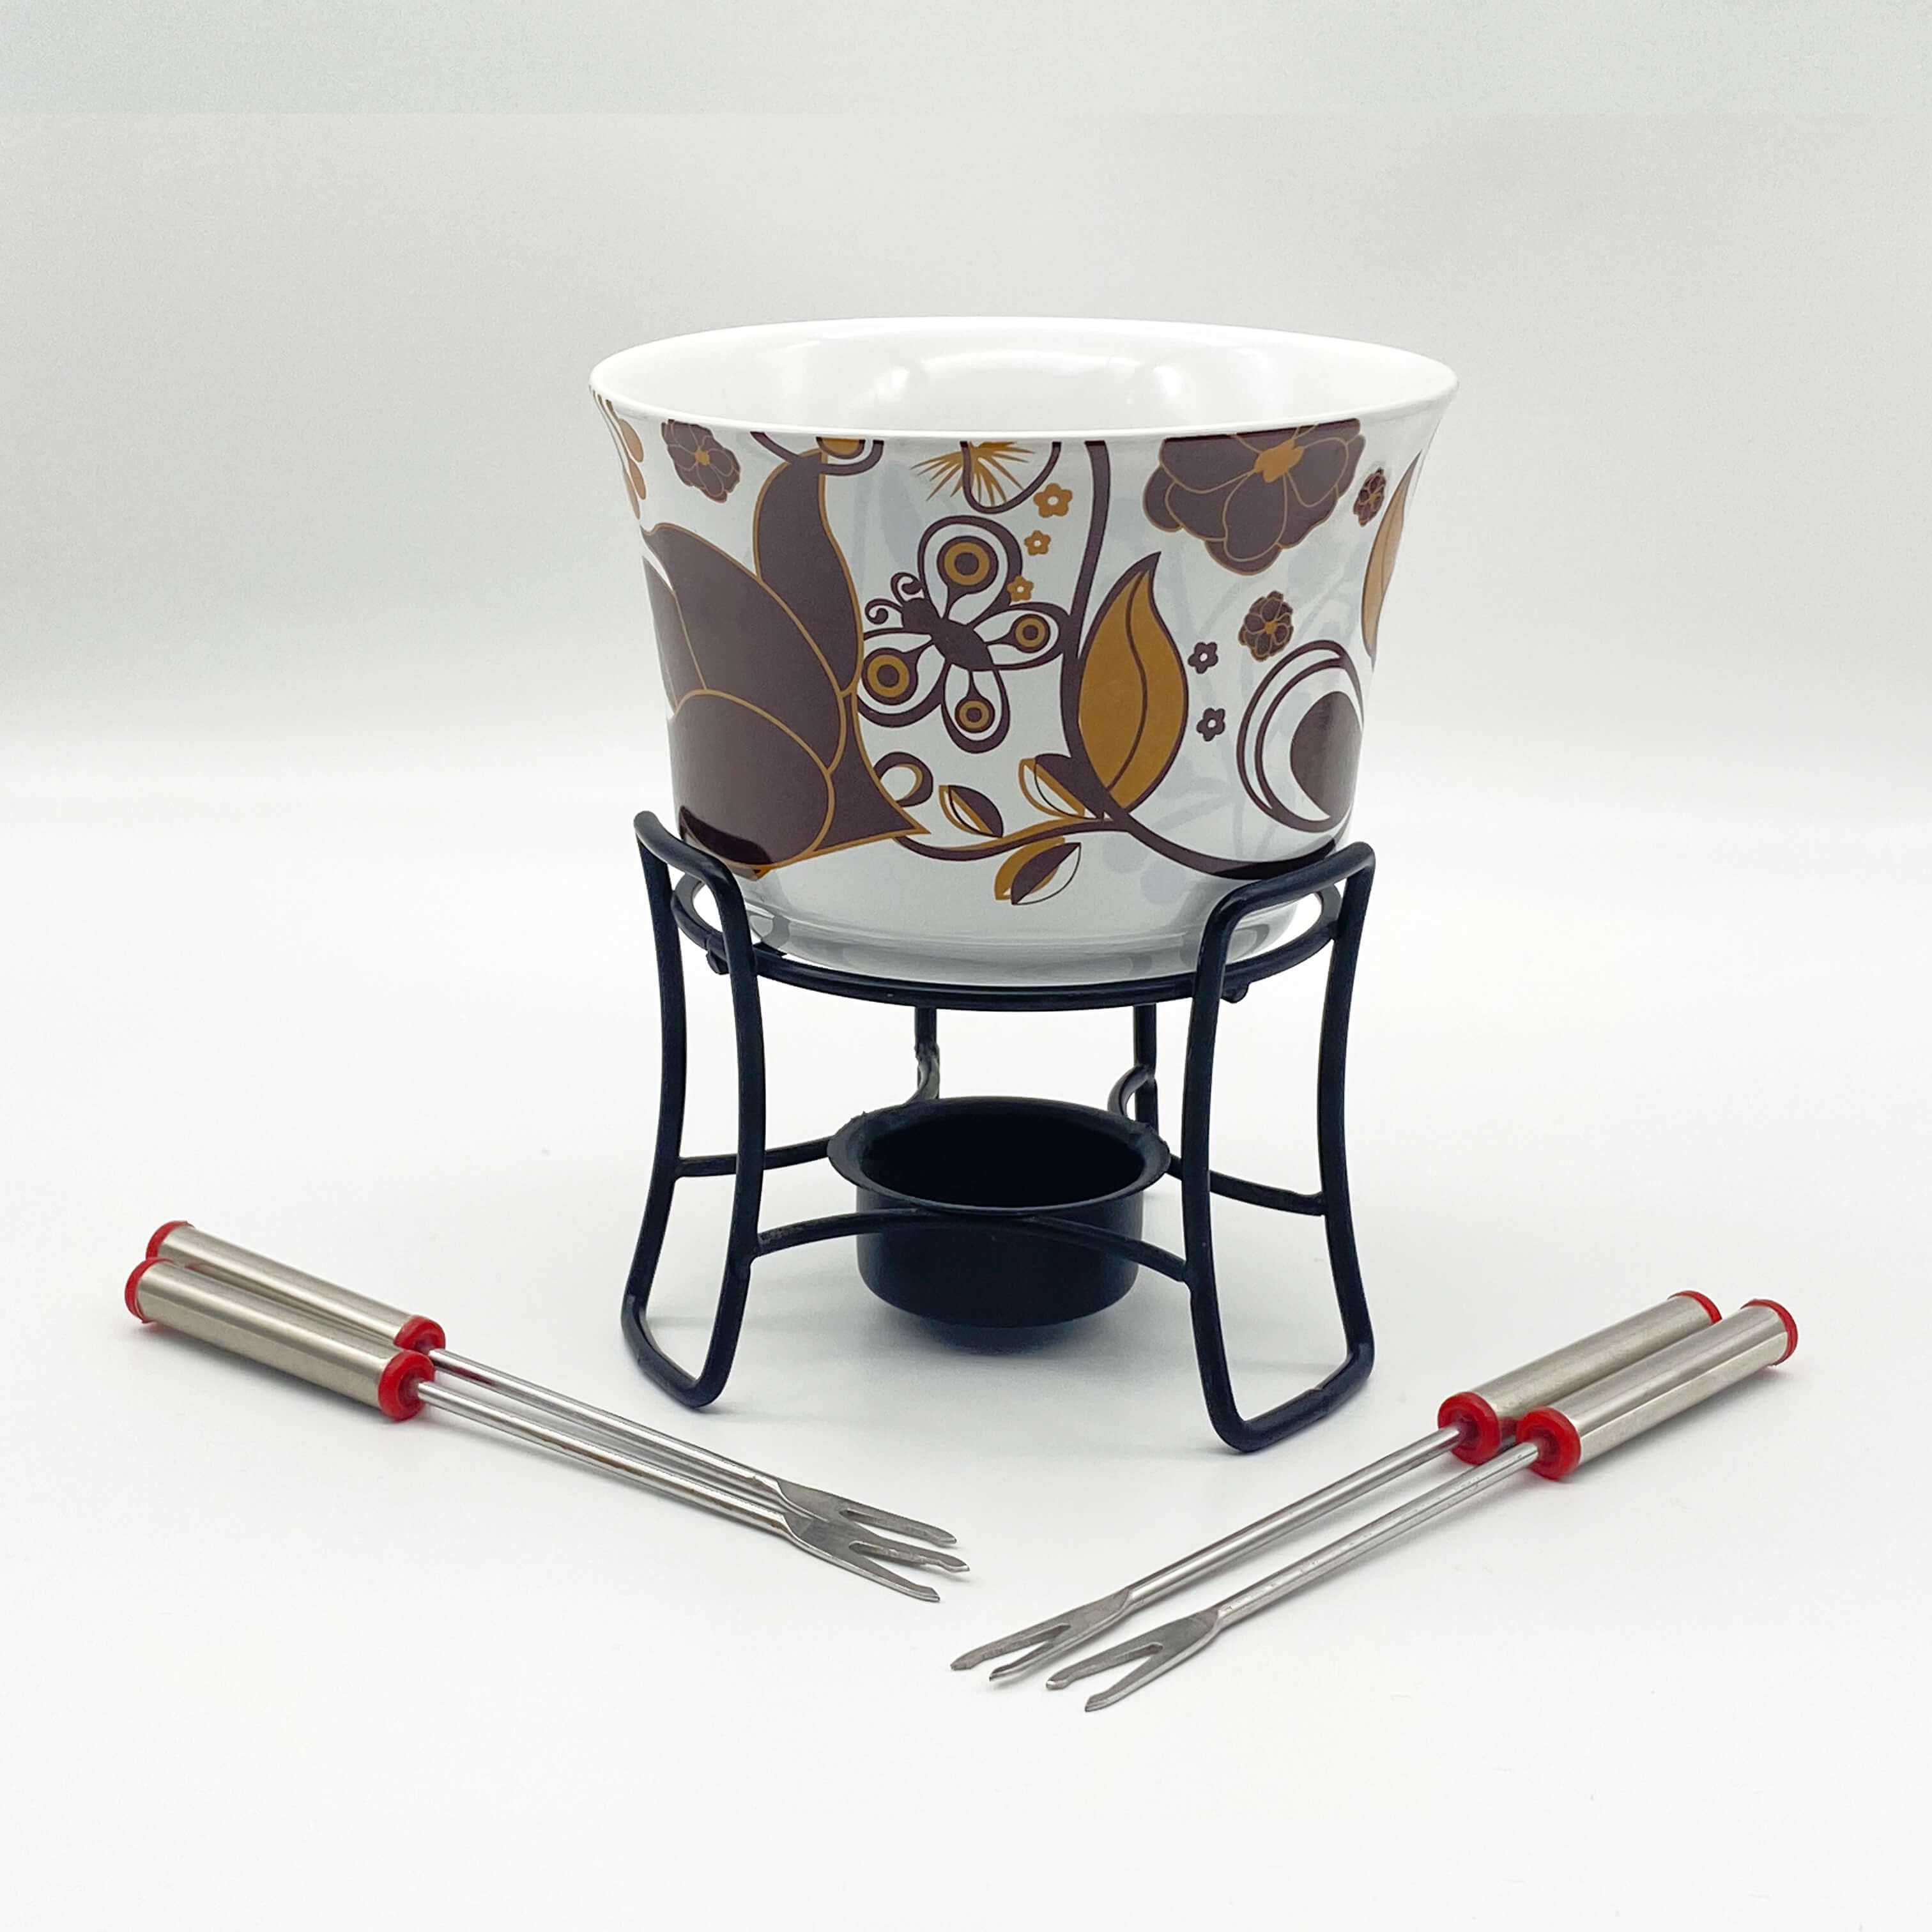 Chocolate Fondue Set Waist Closing Bowl with 4 forks